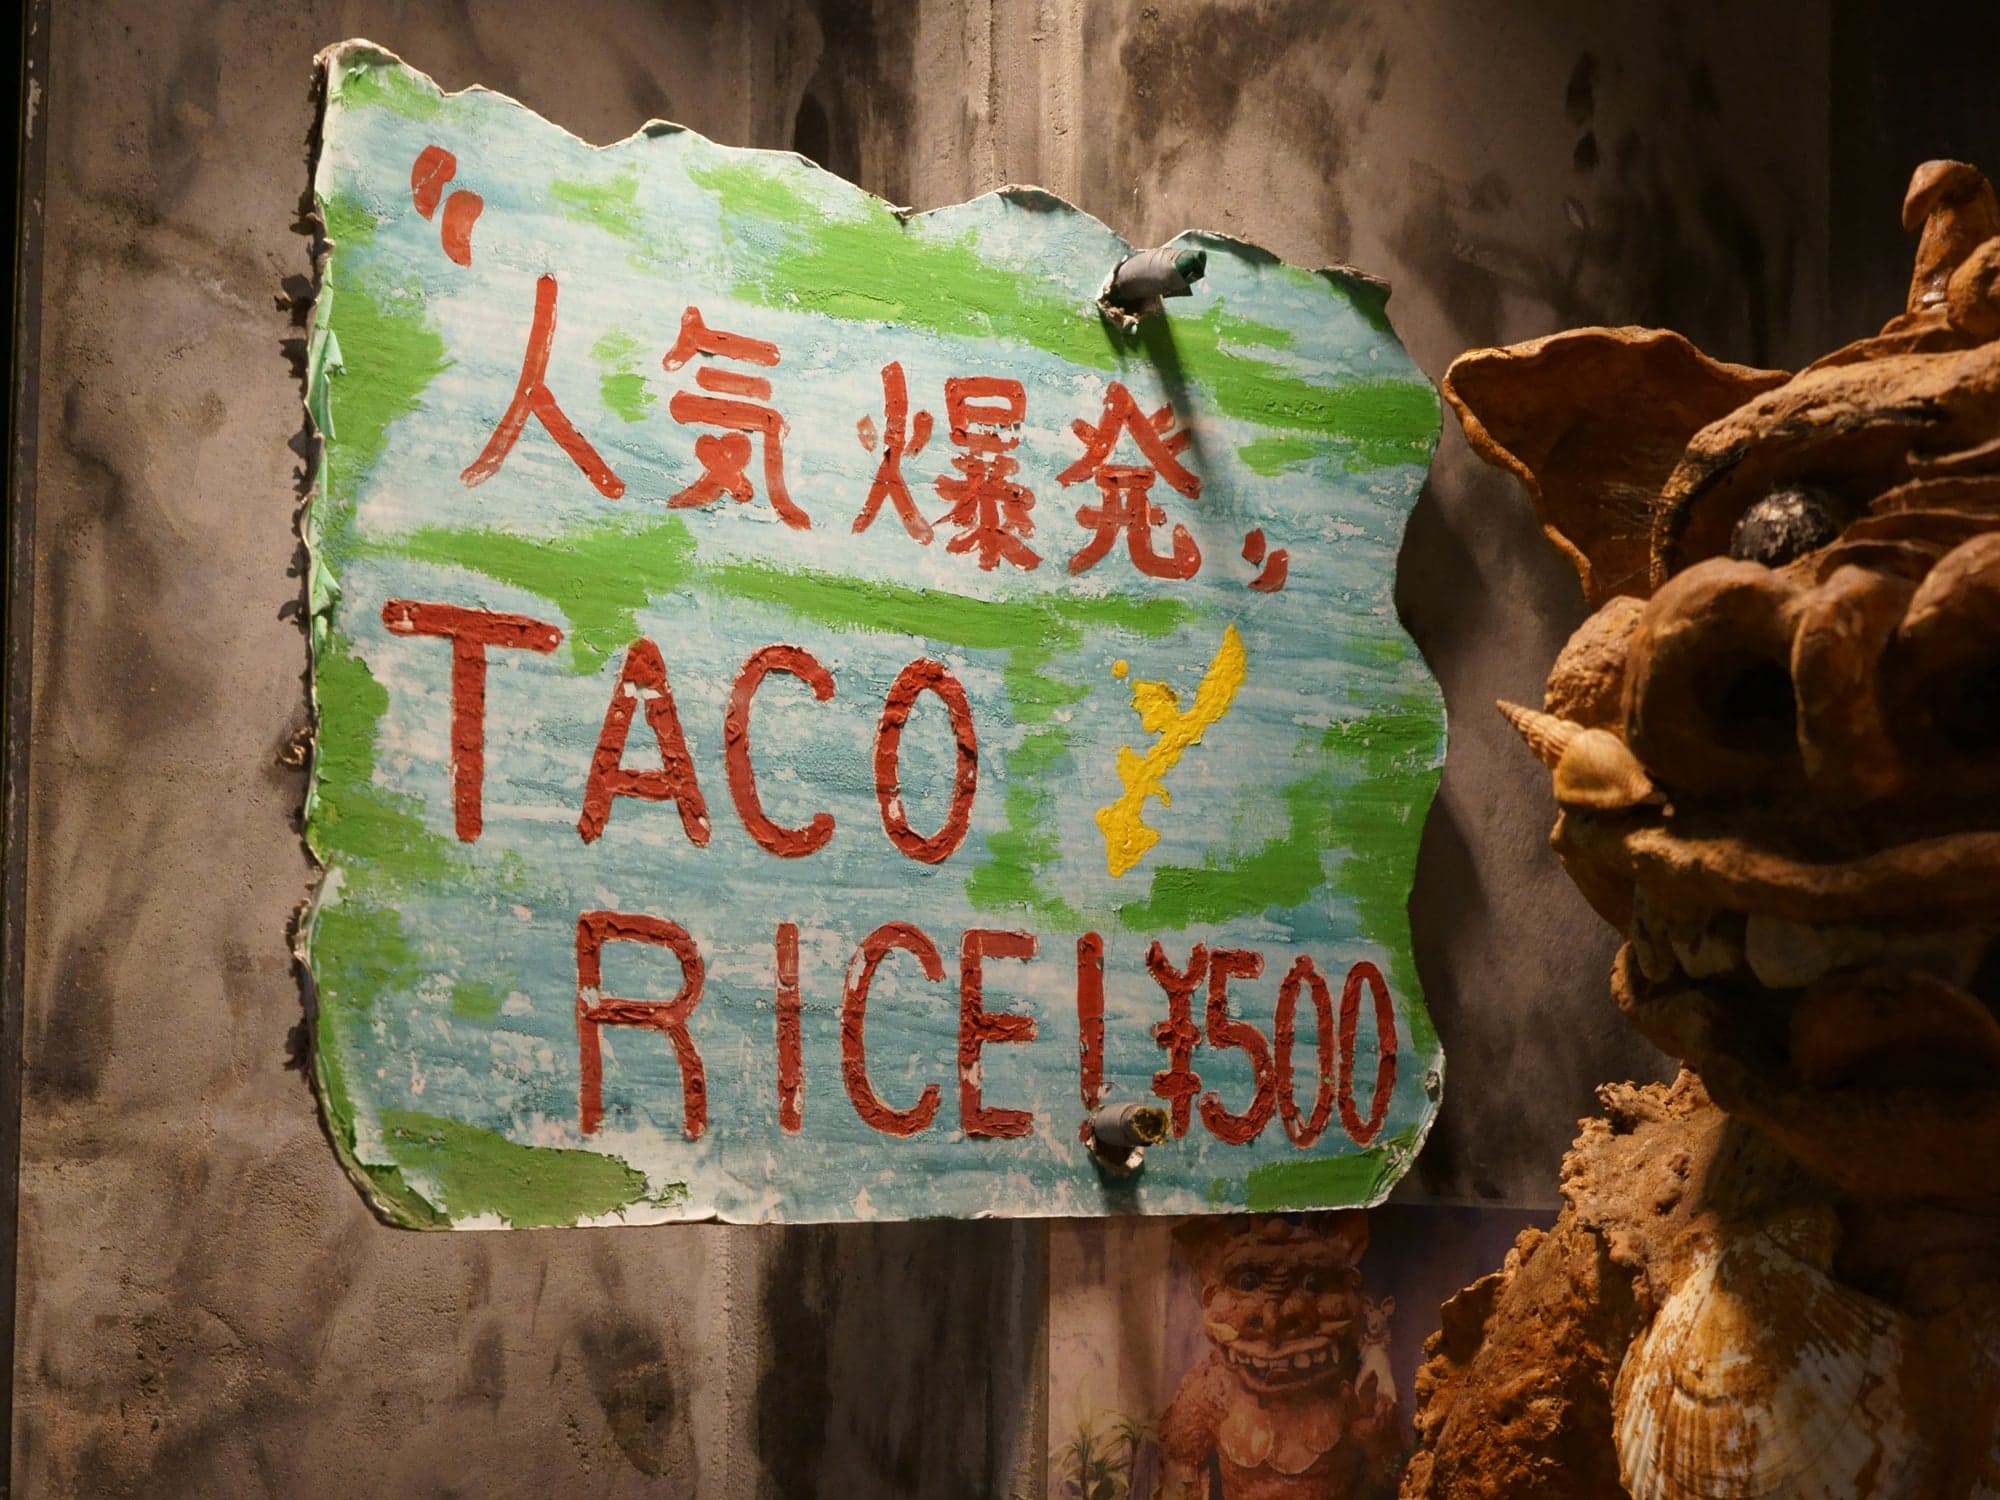 King Taco; Okinawa, Japan